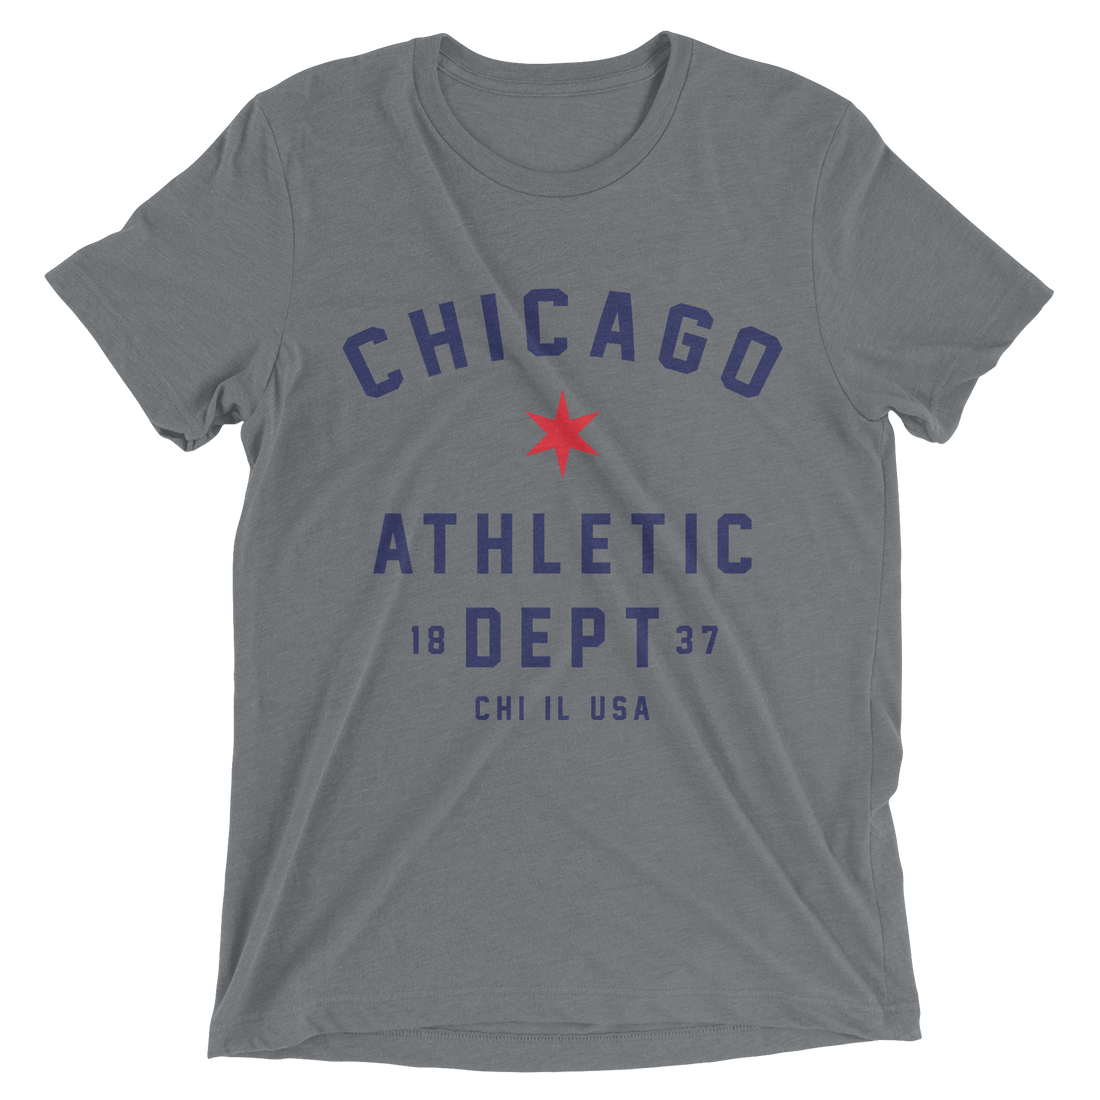 The T-Shirt Deli, Co. Chicago Athletic Dept. T